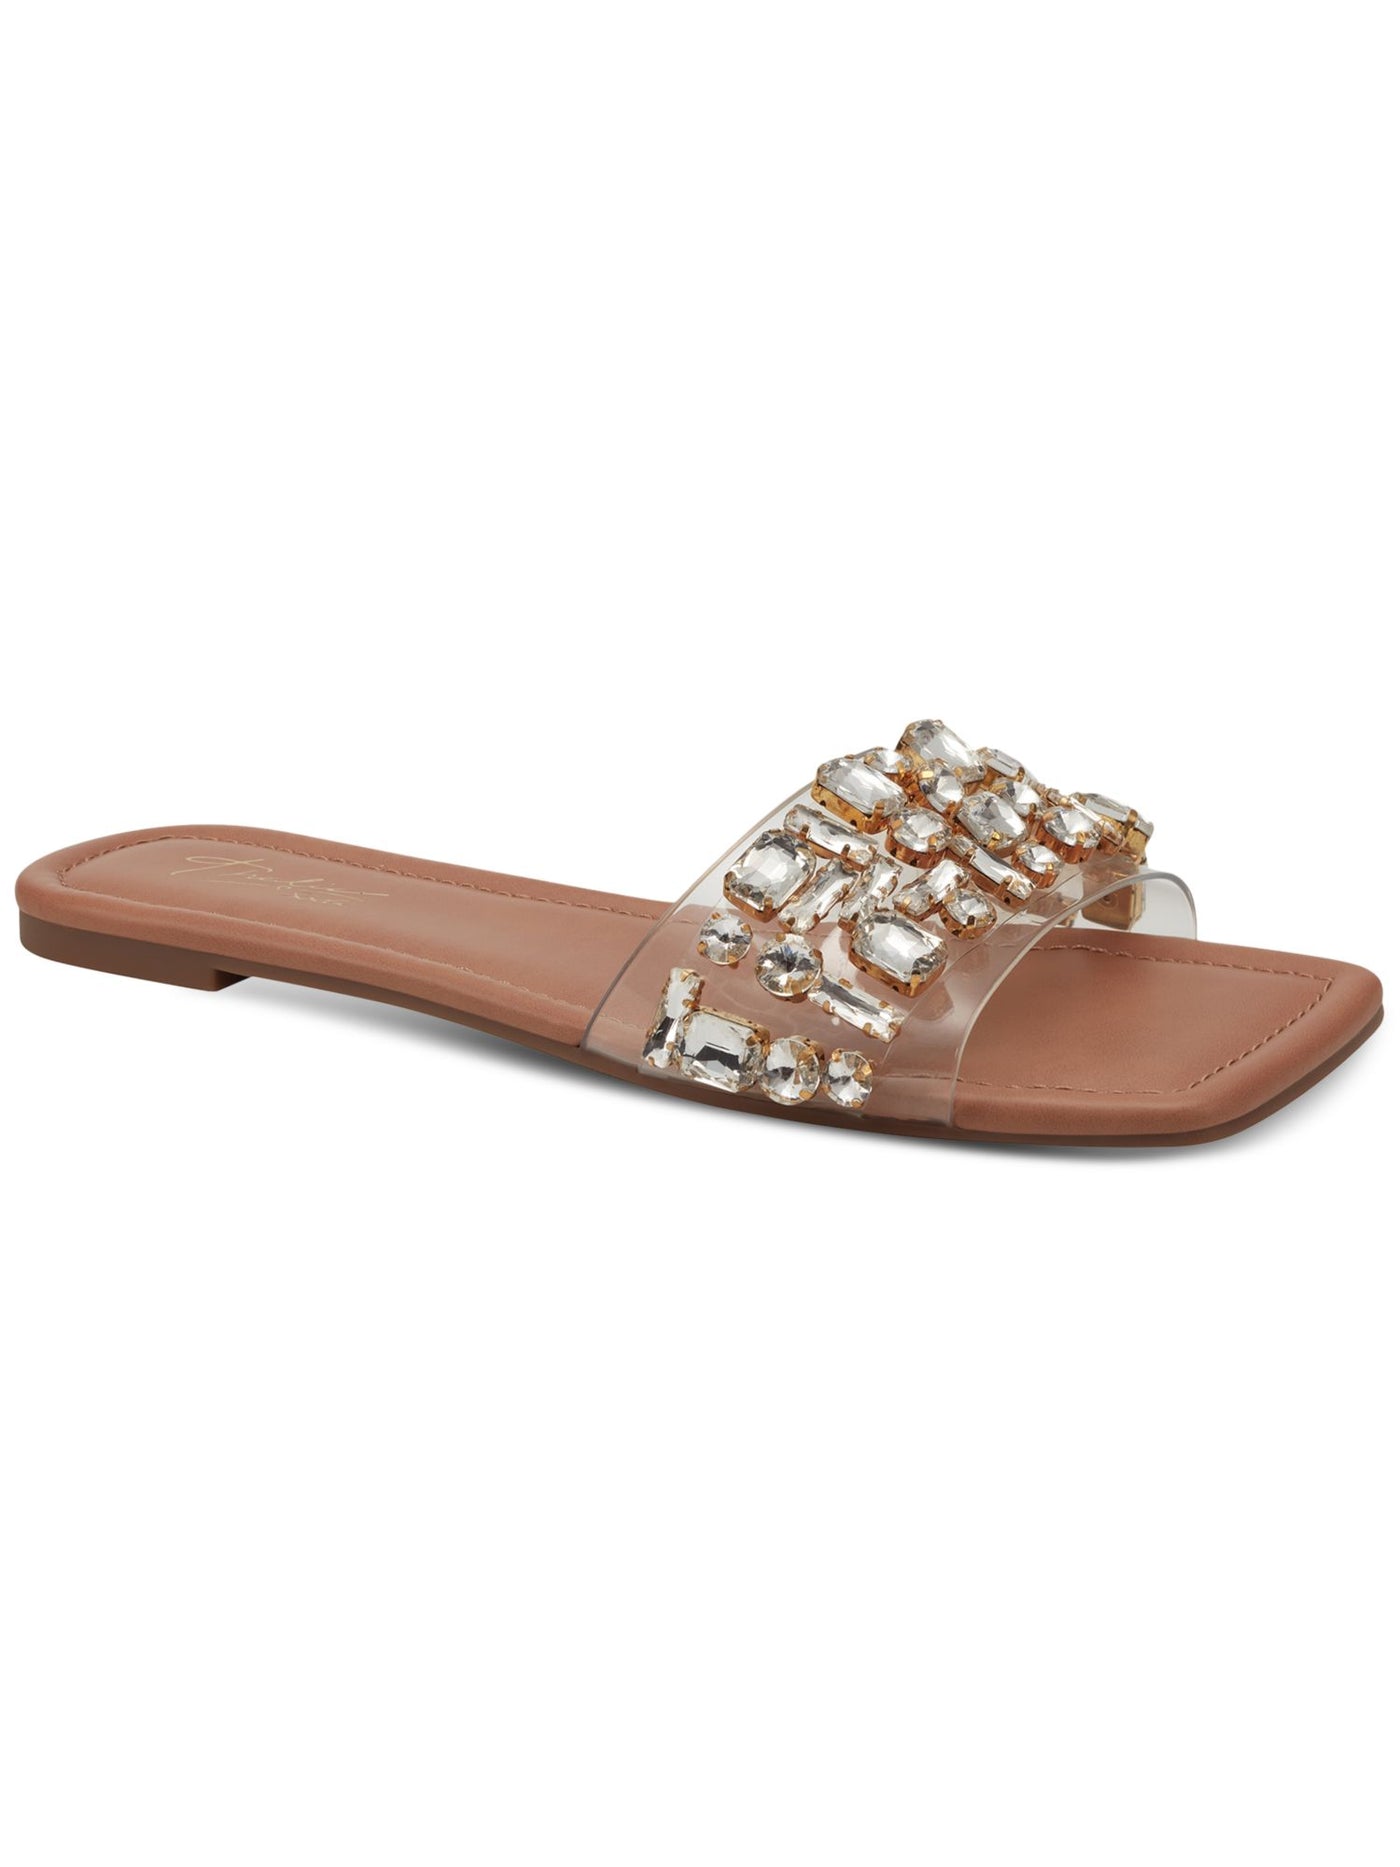 THALIA SODI Womens Clear Transparent Padded Gem Accent Jillene Square Toe Slip On Slide Sandals Shoes 6 M